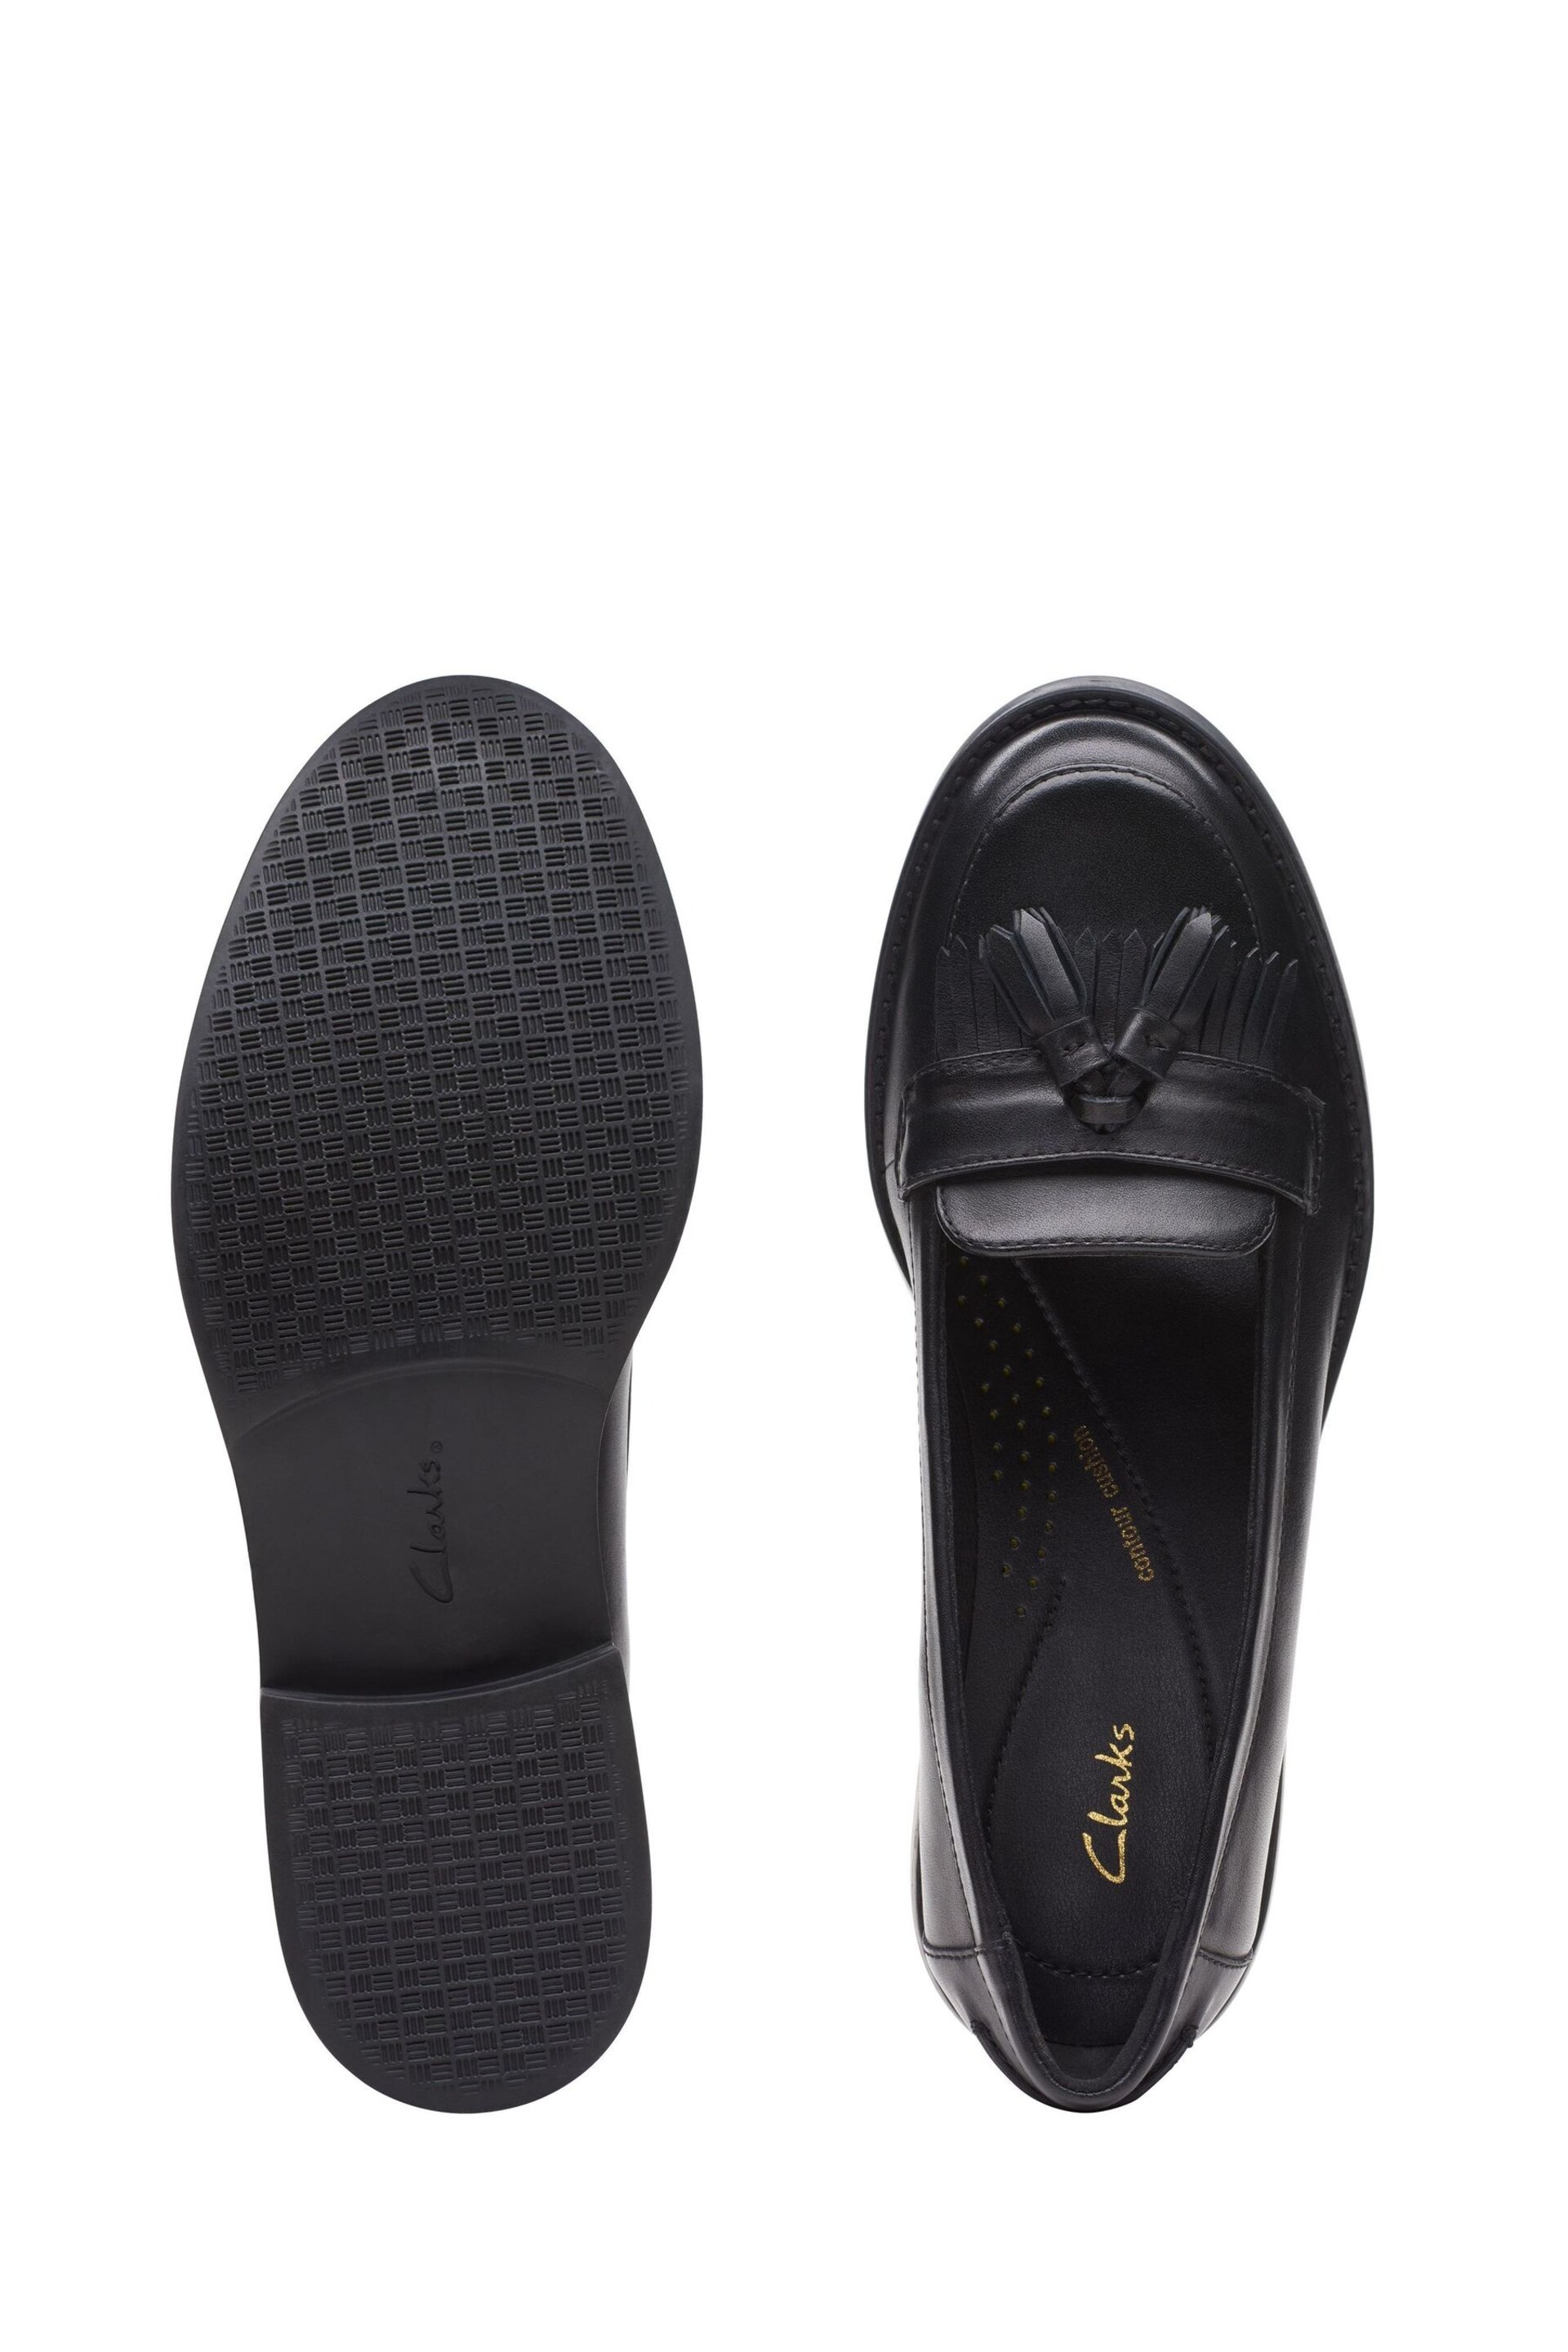 Clarks Black Standard Fit (F) Leather Loafer Shoes - Image 7 of 7